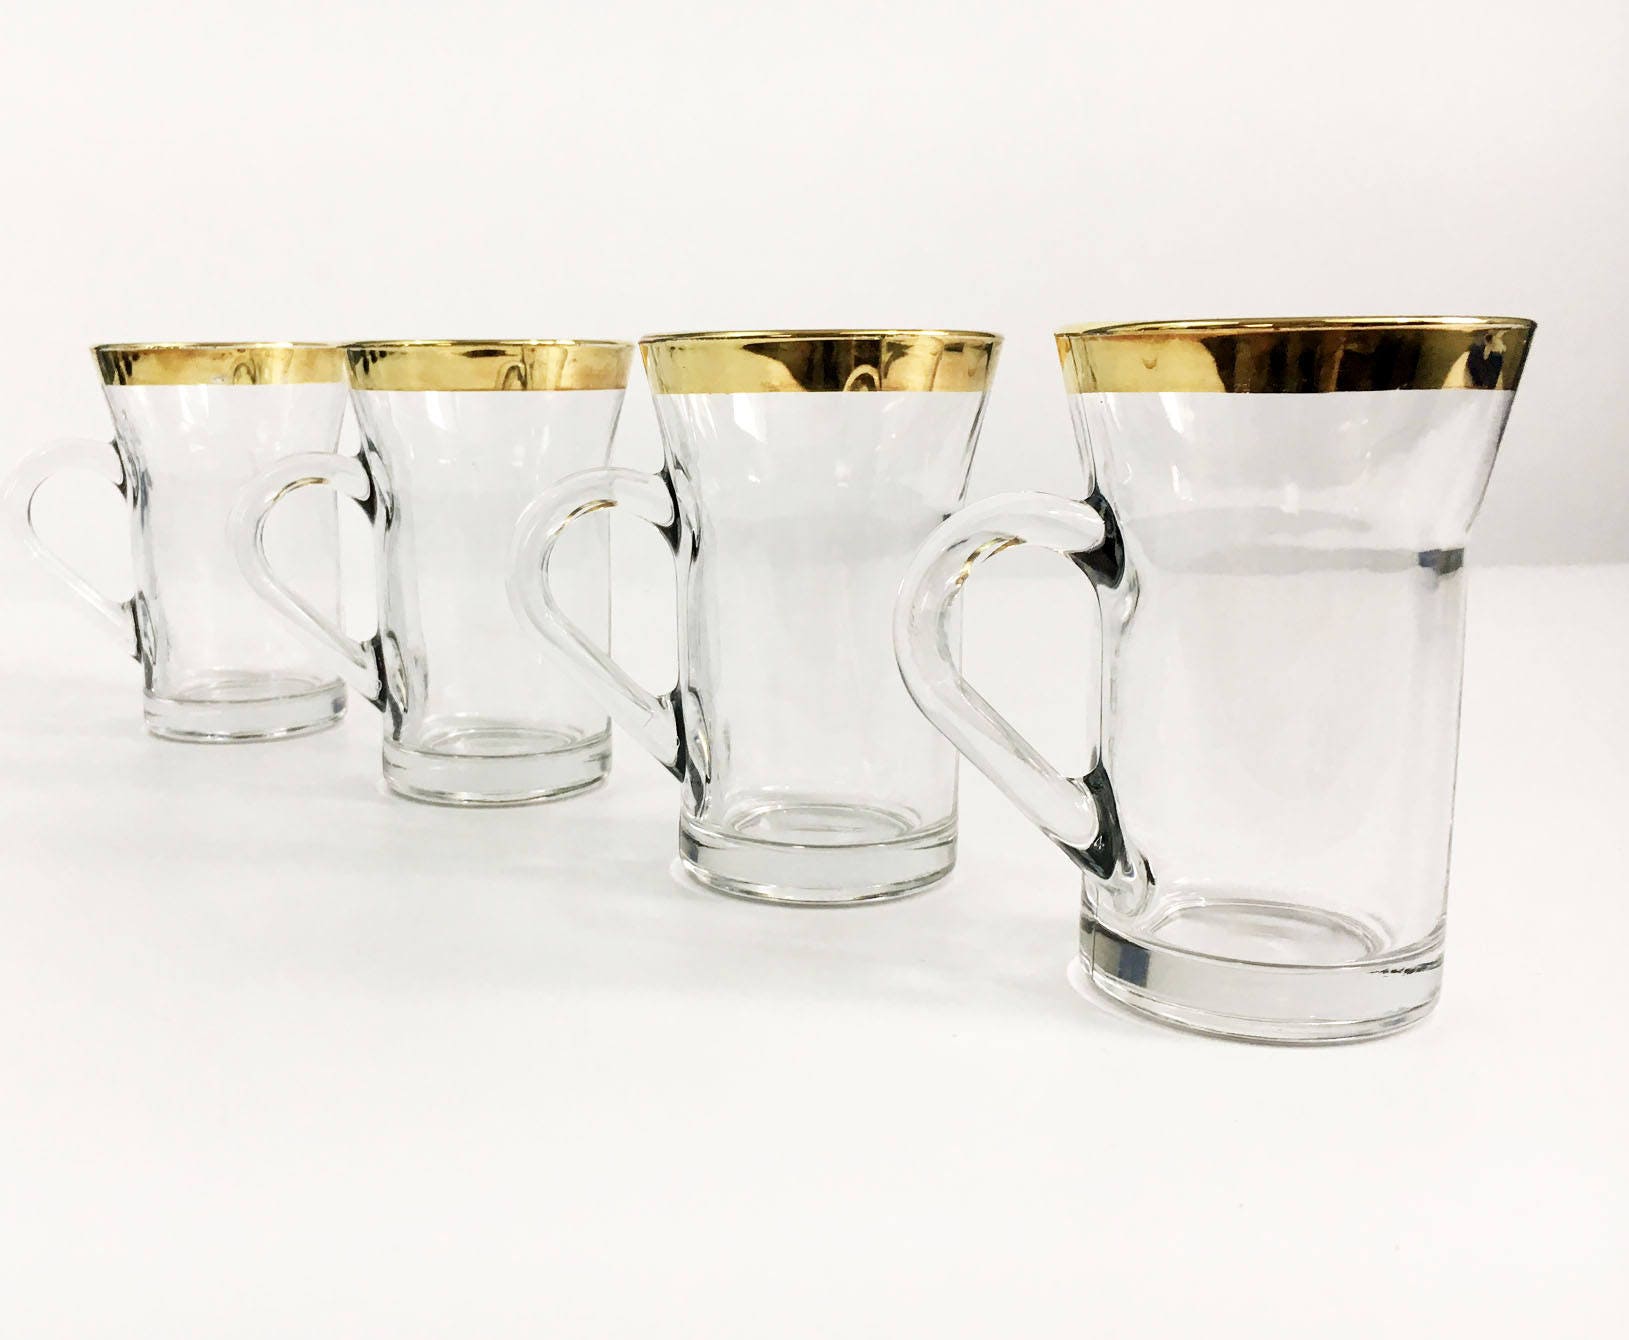 8 oz. Clear Glass Irish Coffee Mug (Set of 4)